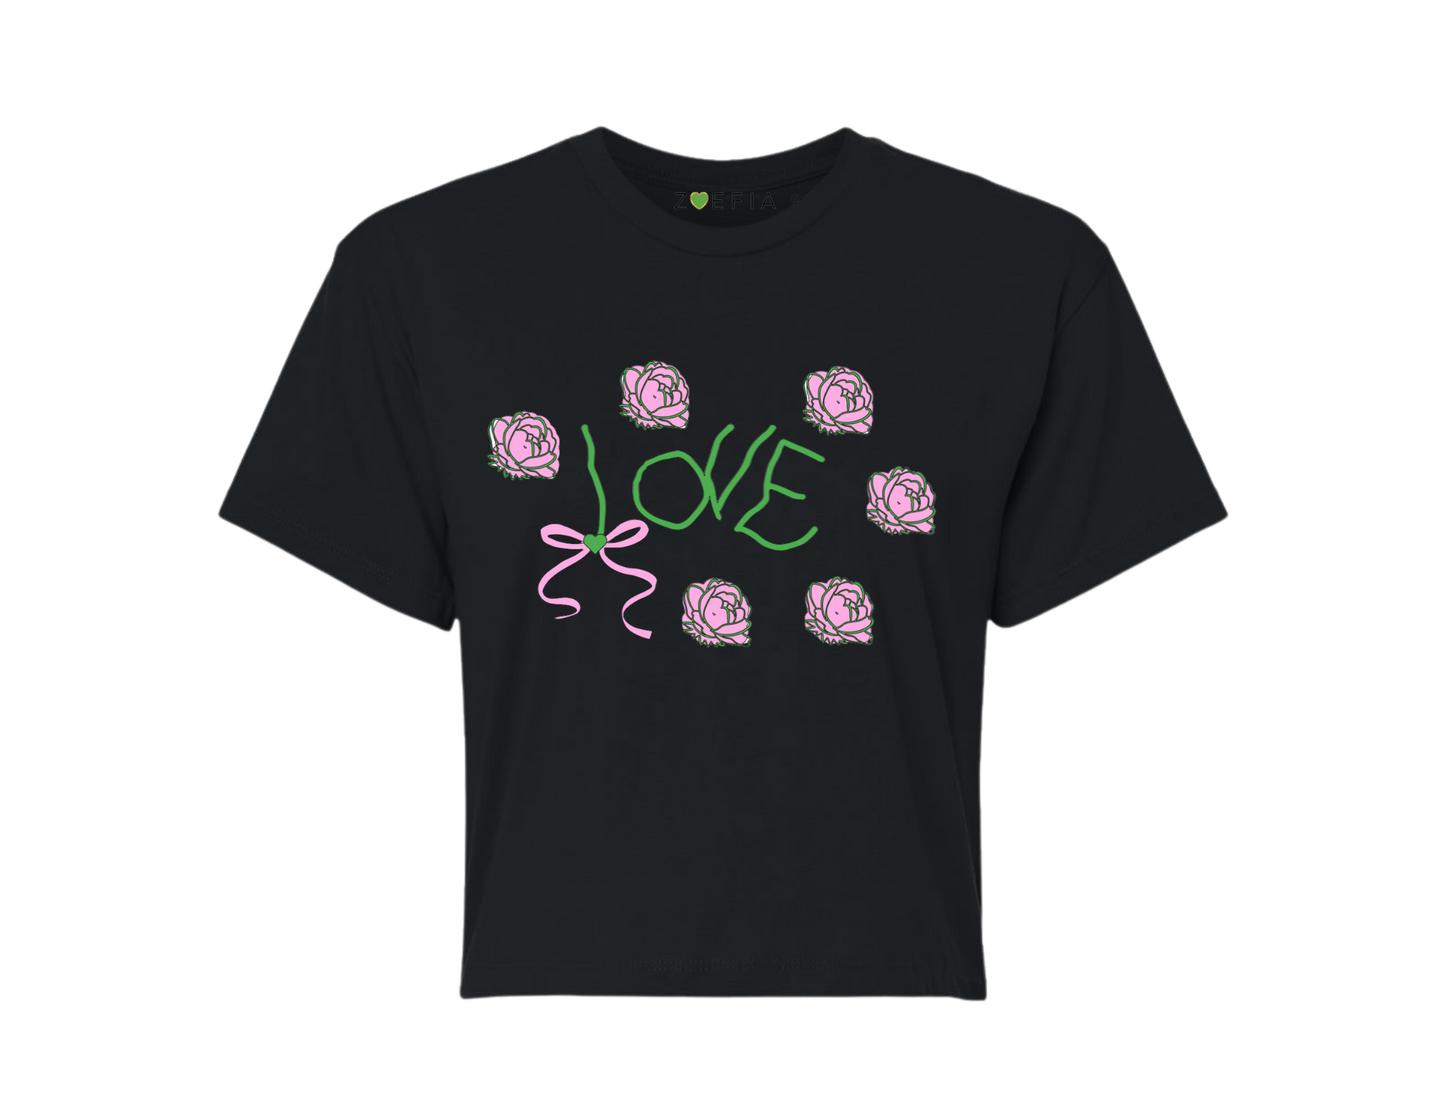 Love Floral Crop Top T-Shirt - Black